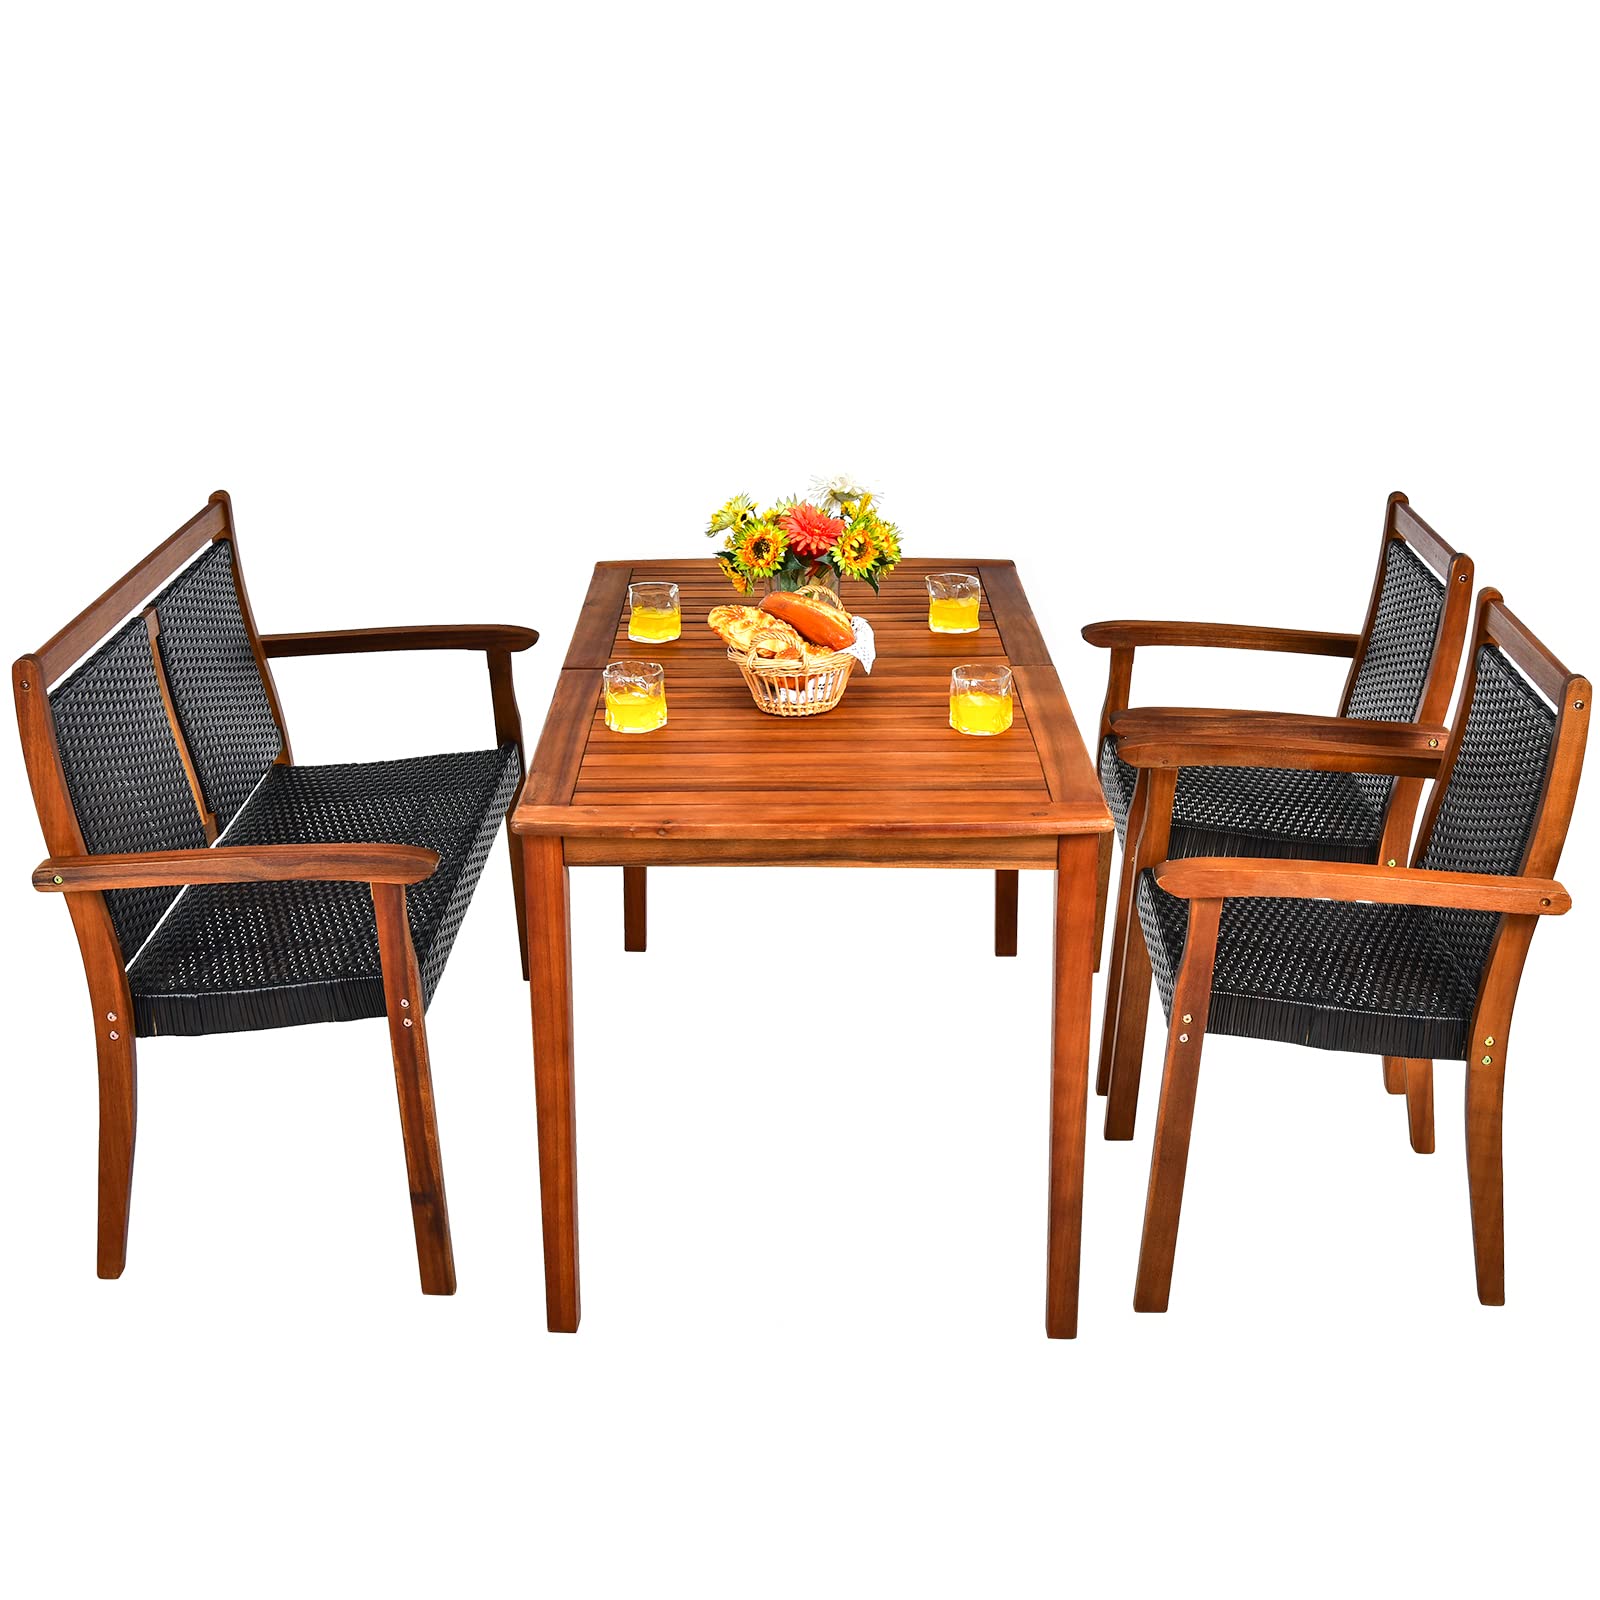 4 Pieces Patio Dining Set, Patiojoy Outdoor PE Rattan & Acacia Wood Dining Table Set with Umbrella Hole